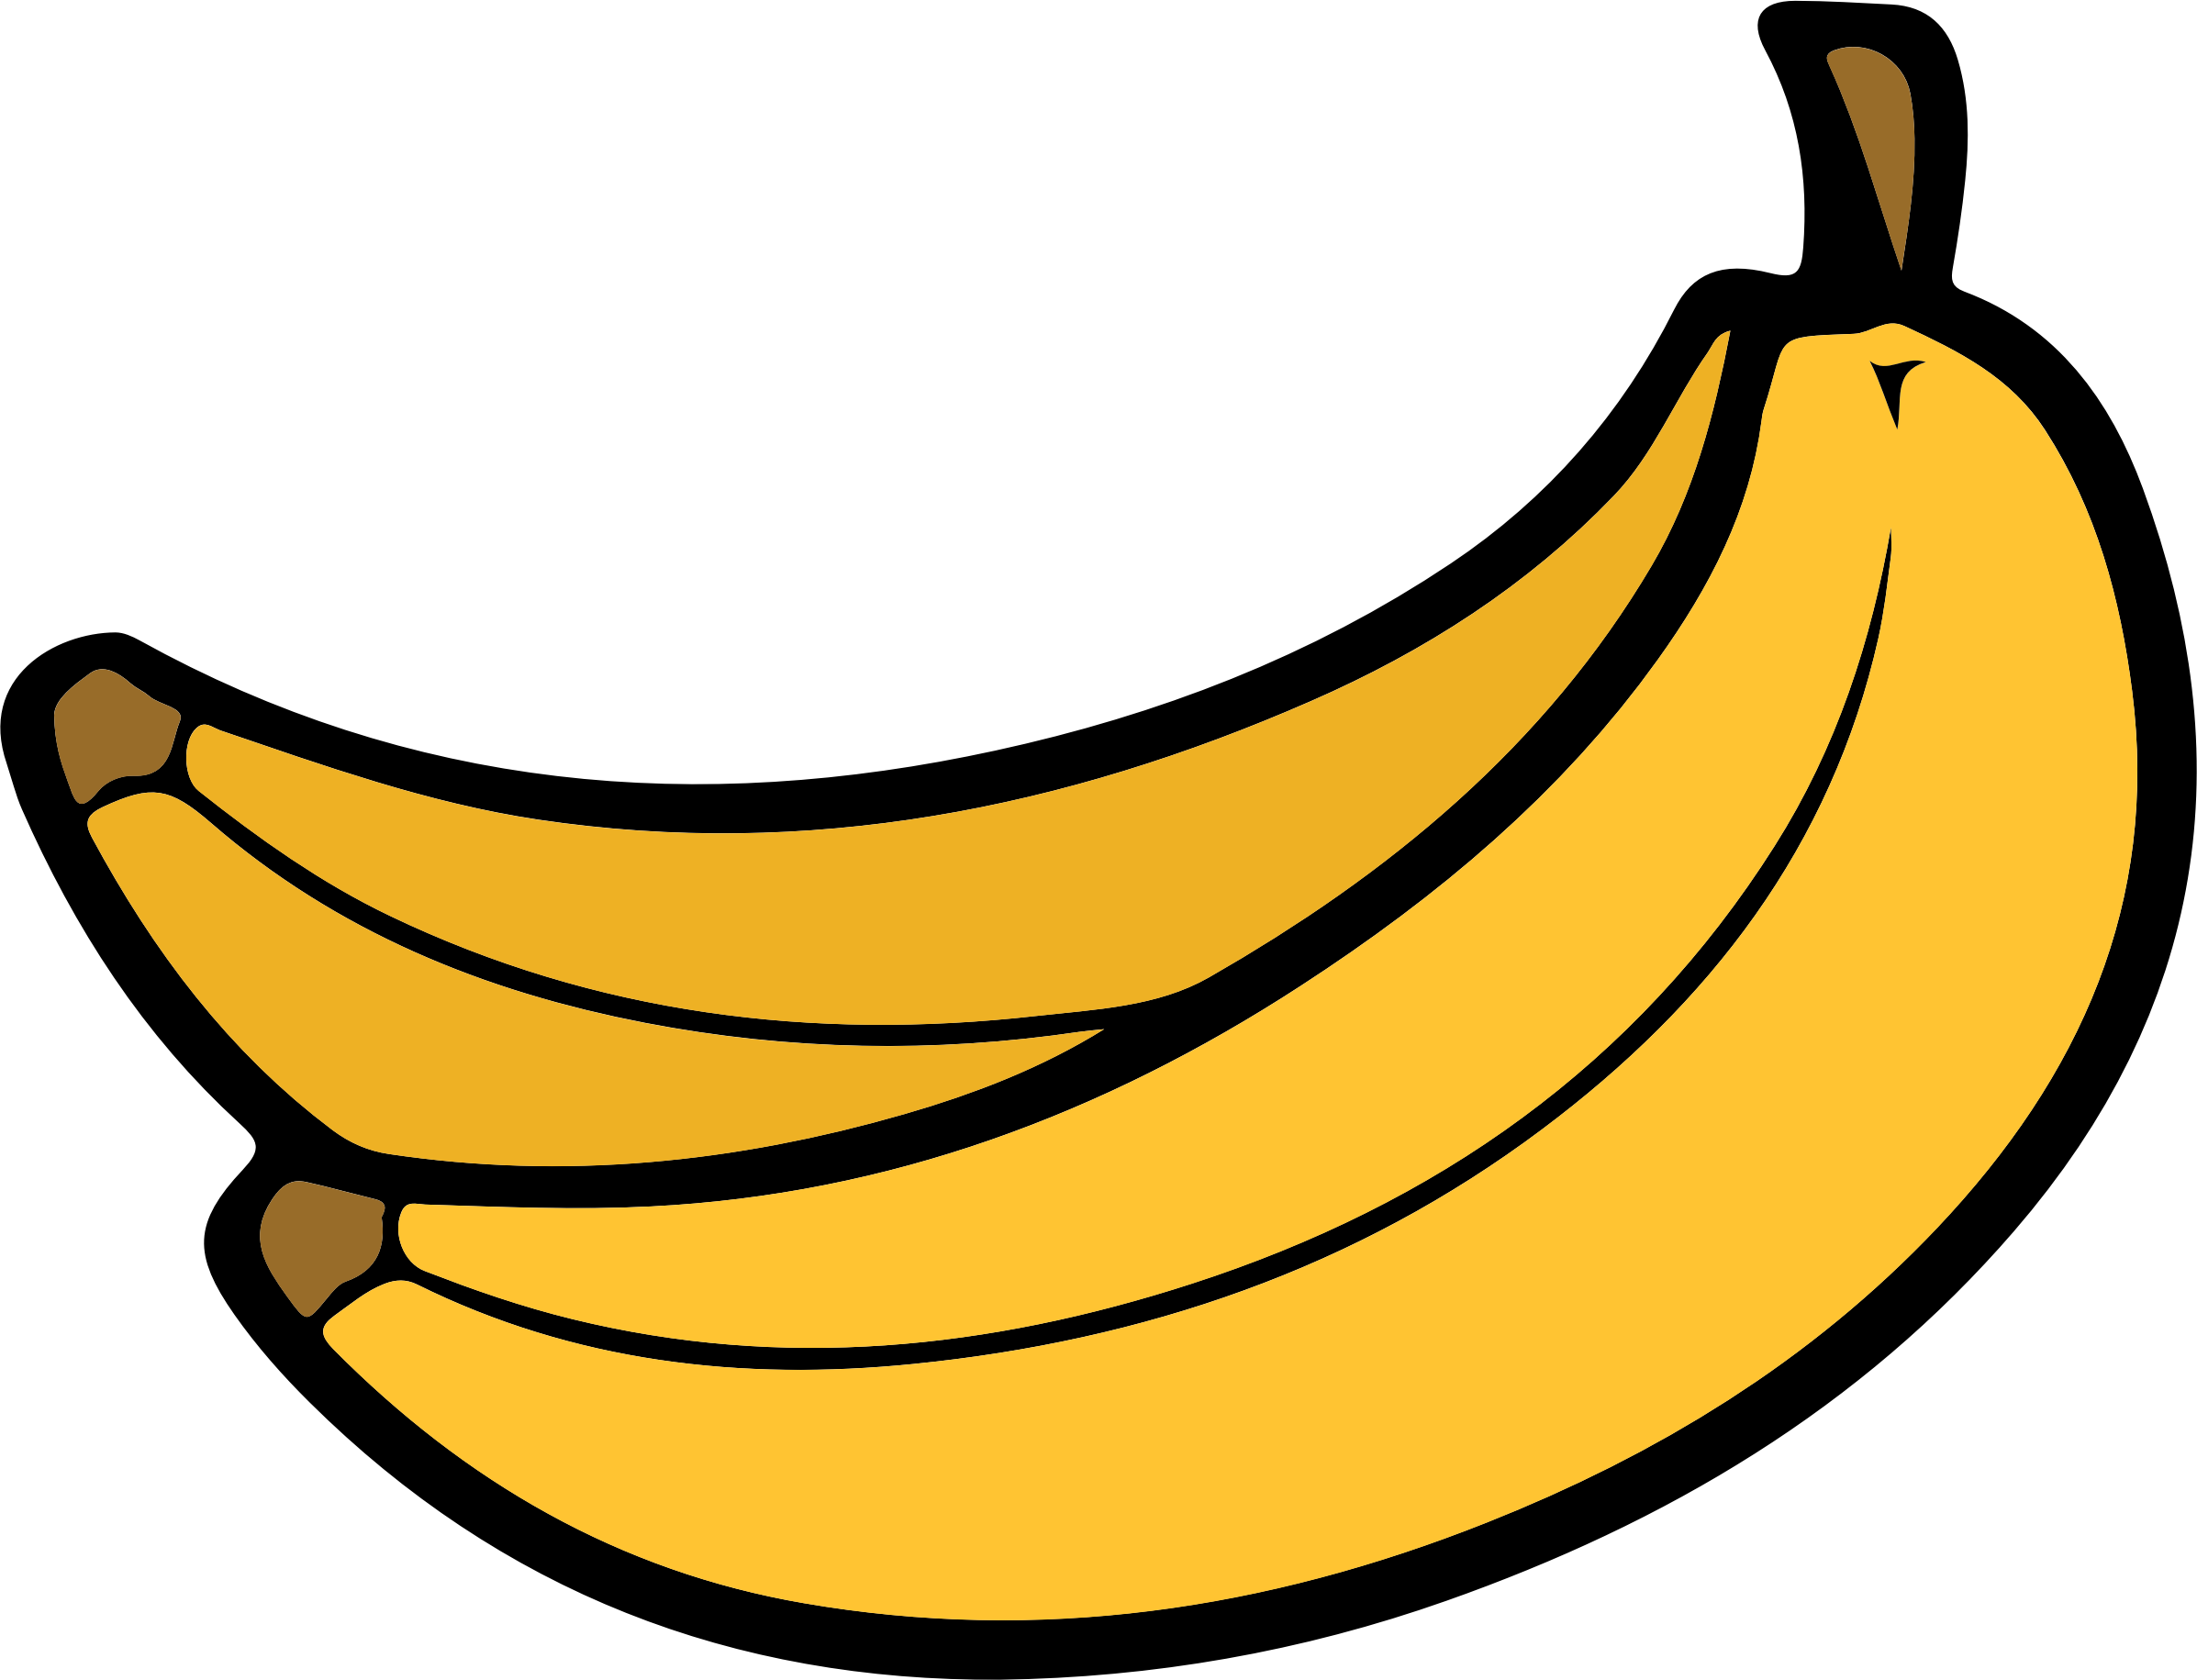 Two Bananas PNG - 146554